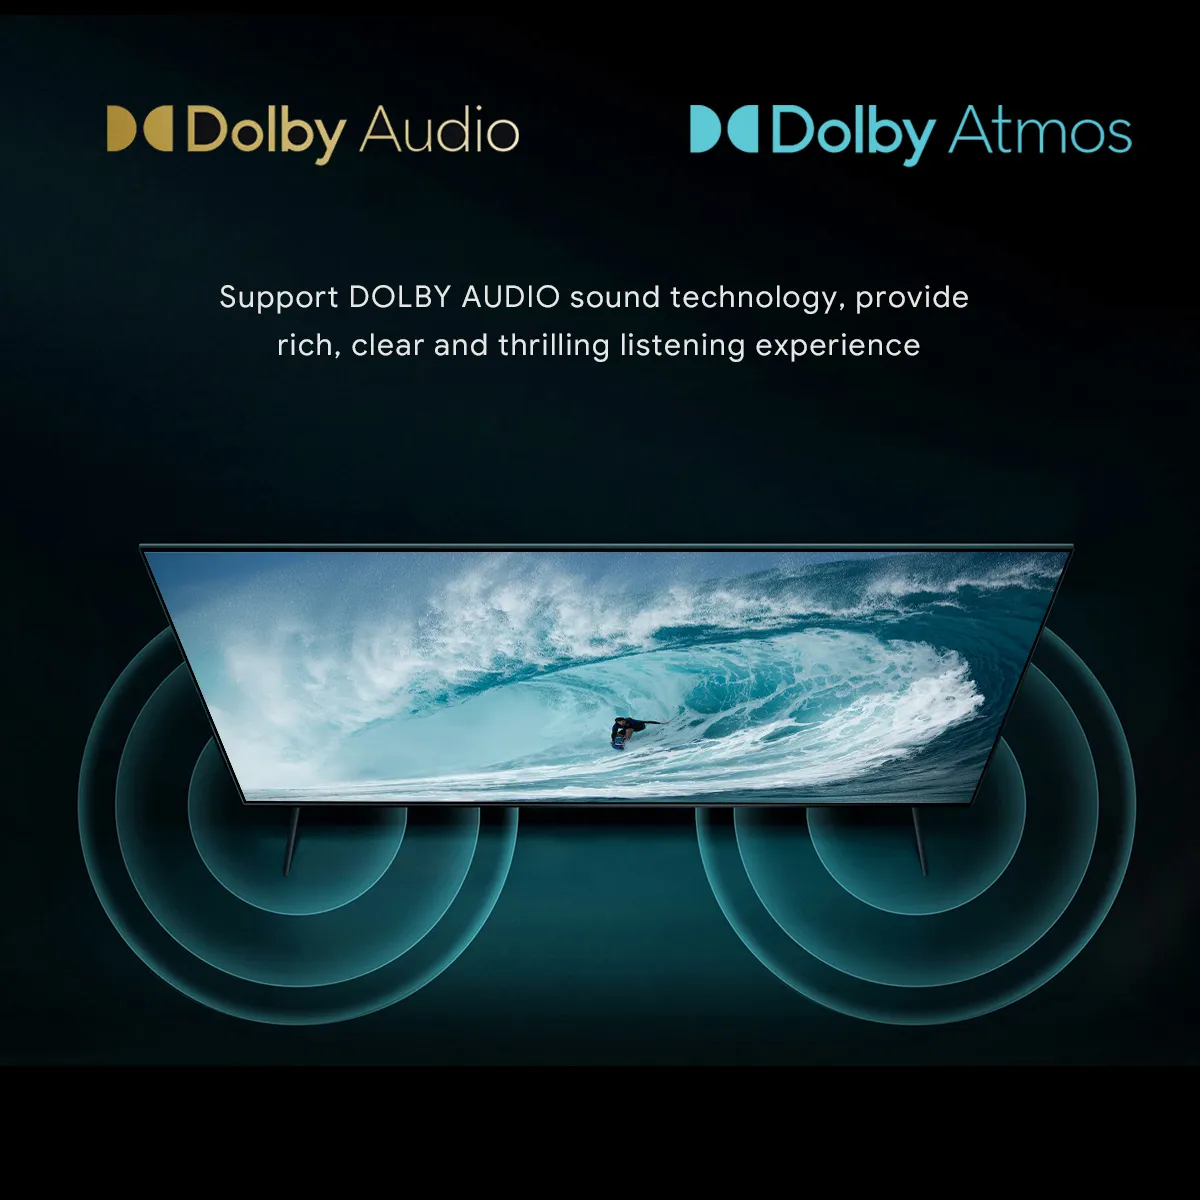 Mecool Android TV Box KM2 Plus Plus 4K Amlogic S905x4 2G DDR4 Ethernet WiFi Multi-Streamer HDR TVBoxホームメディアプレーヤーセットトップボックス